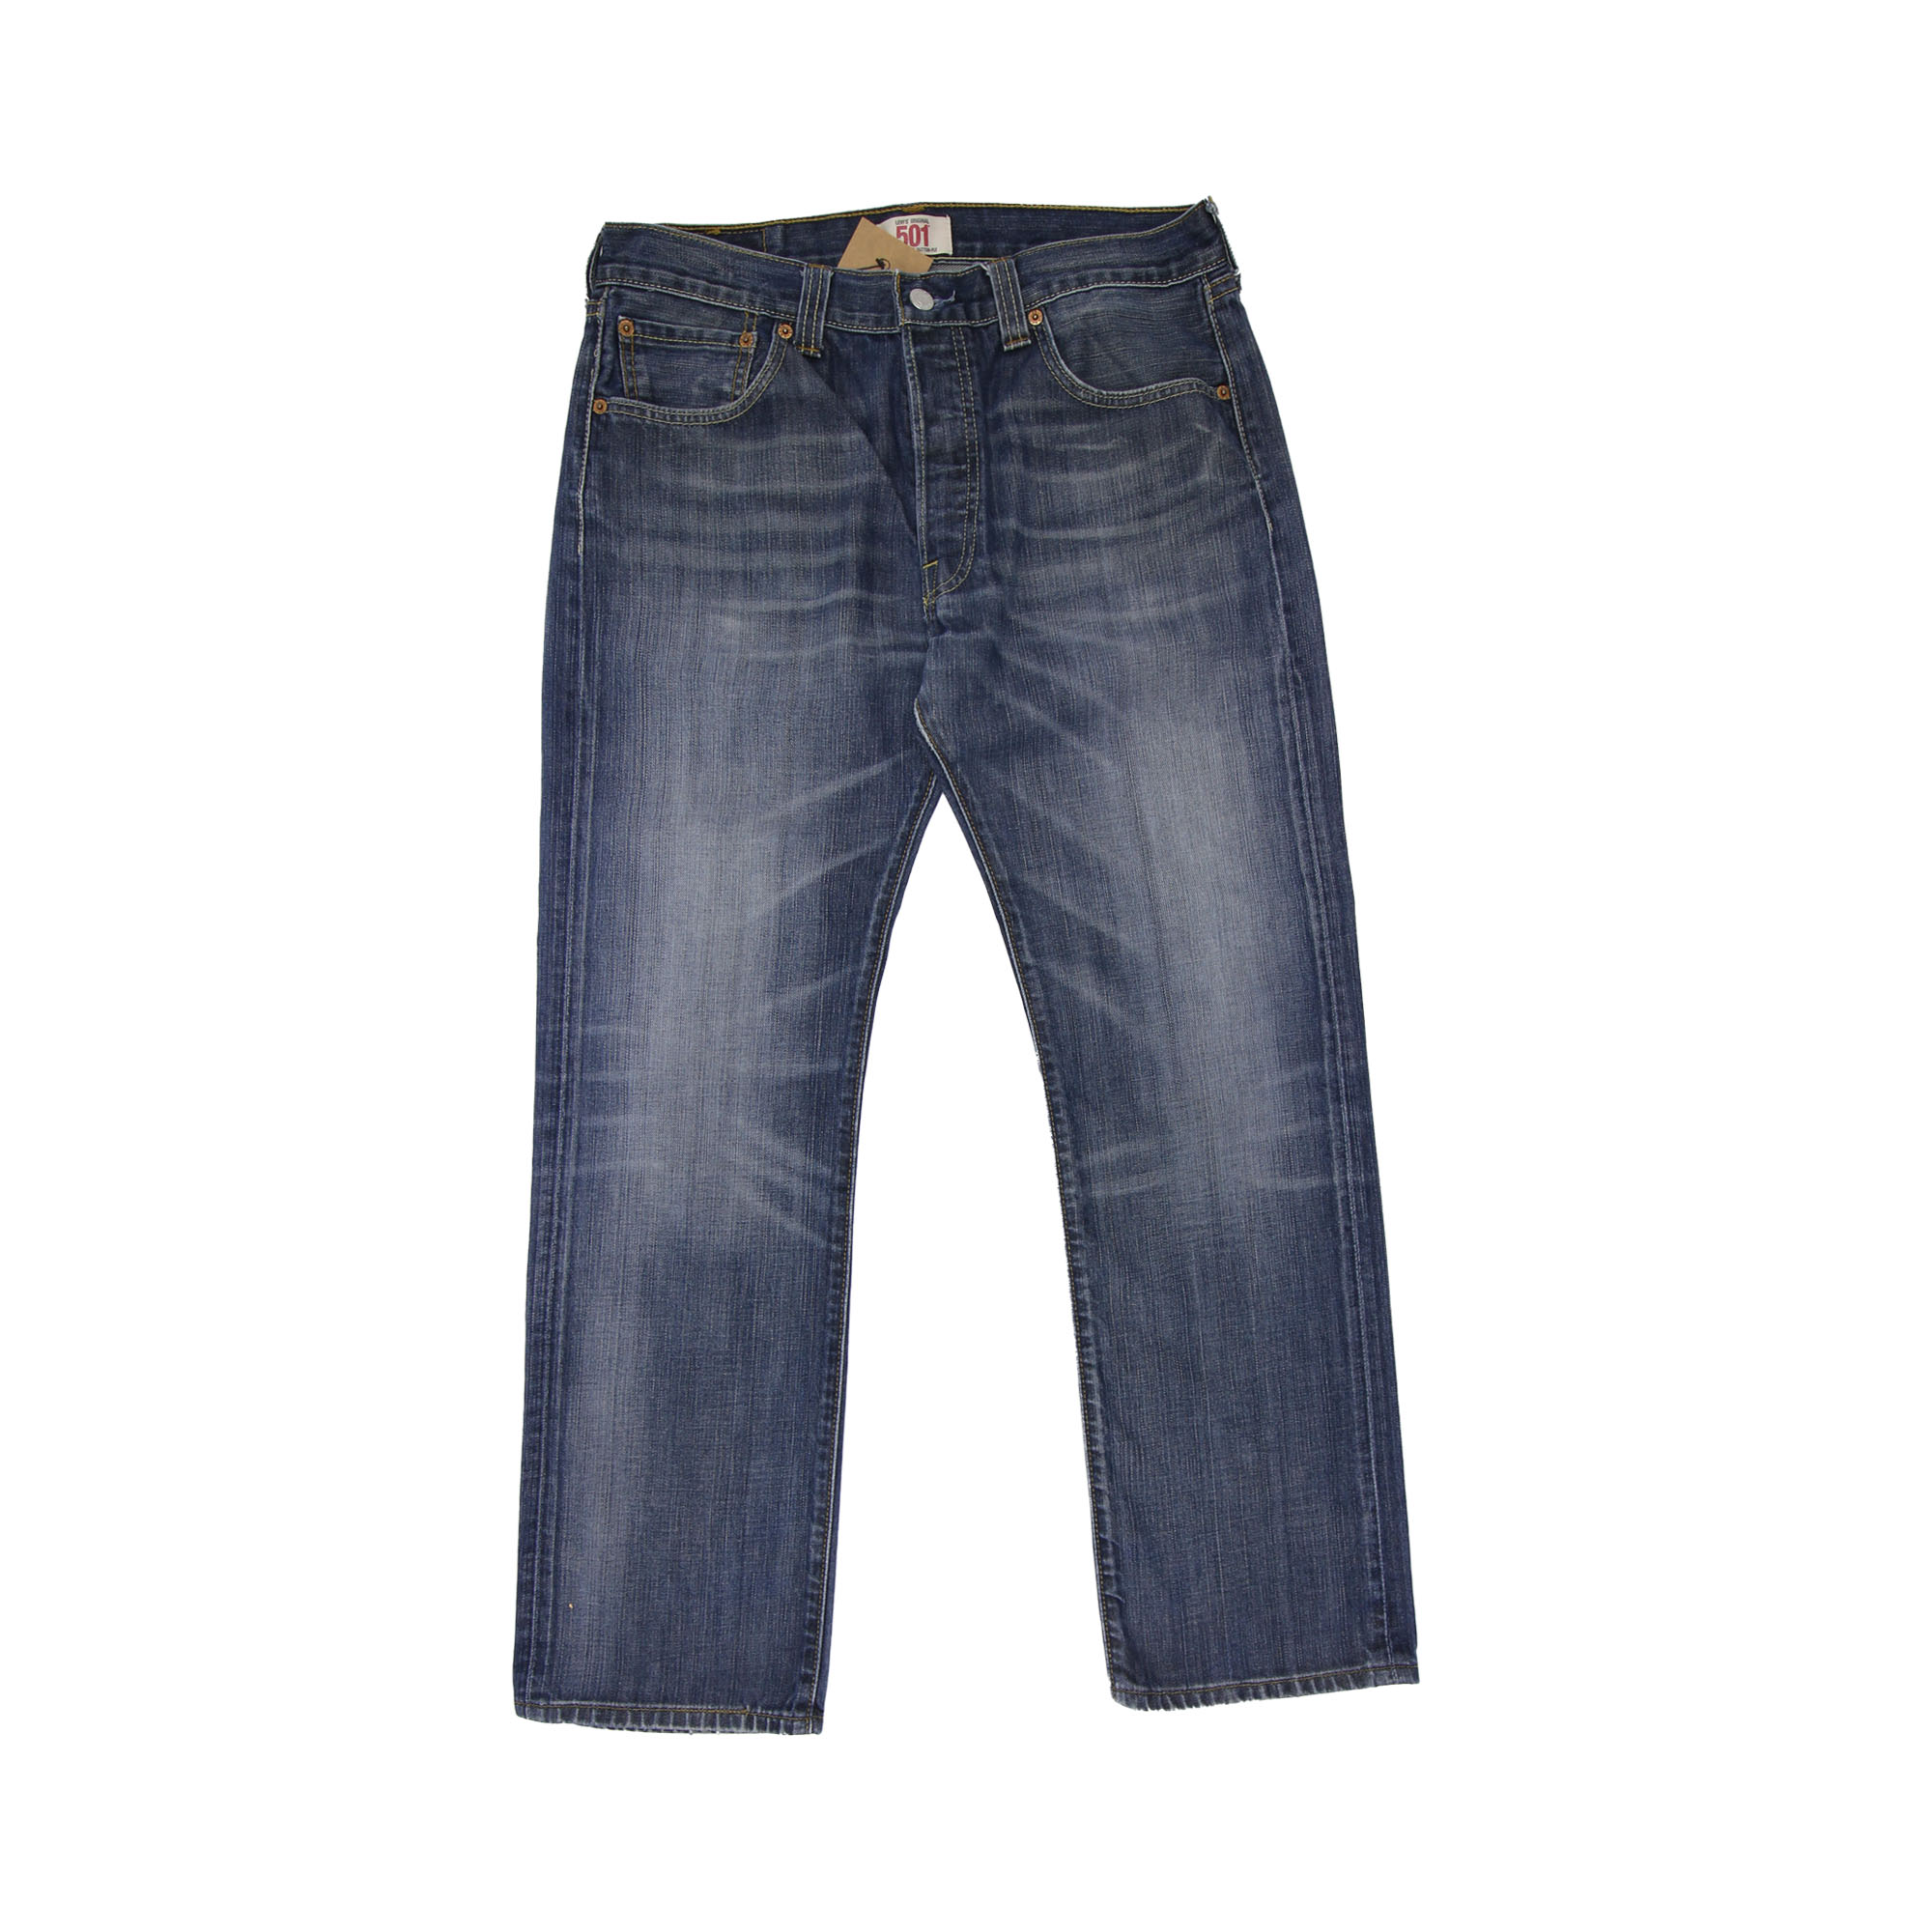 Levi's 501 Jeans -  W34 L32